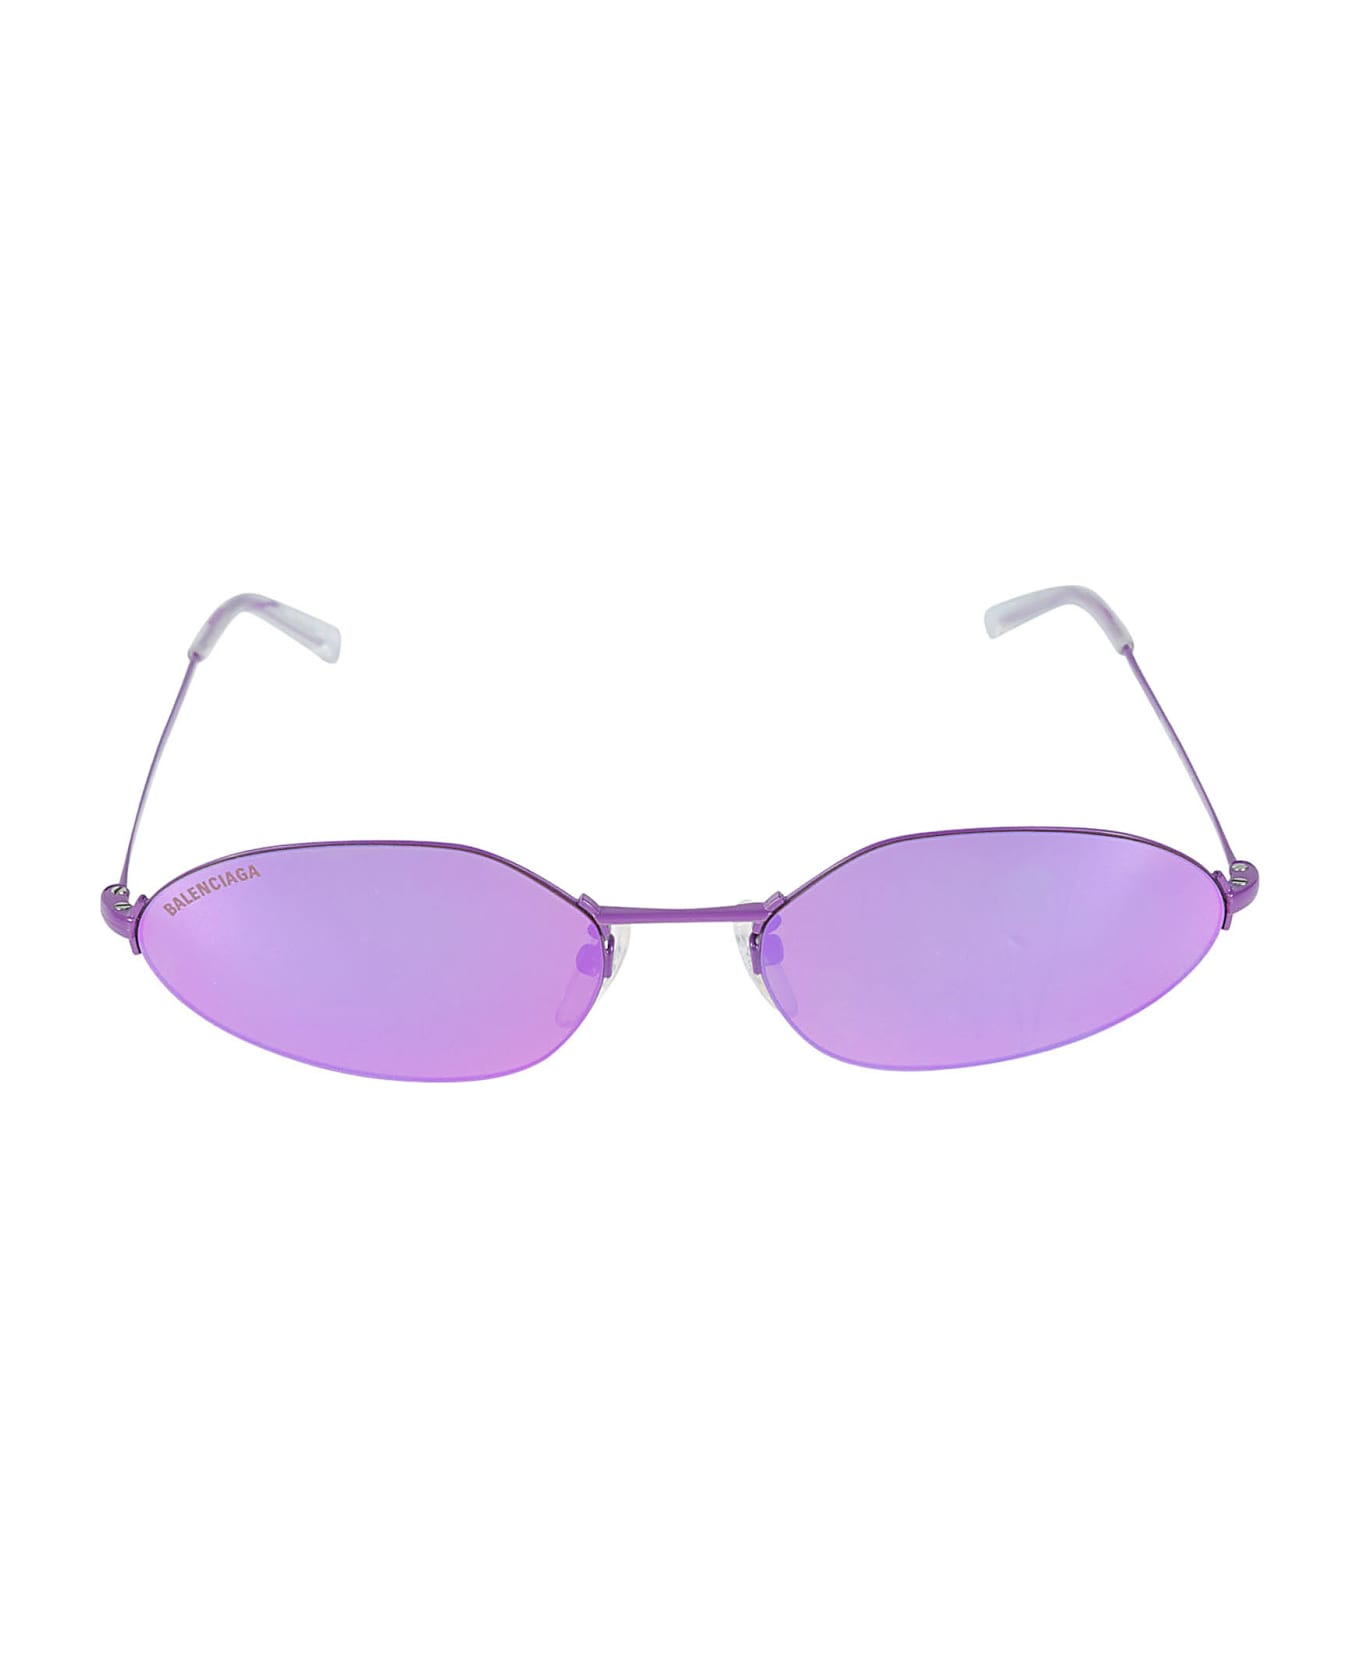 Balenciaga Eyewear Logo Frame Sunglasses - Violet